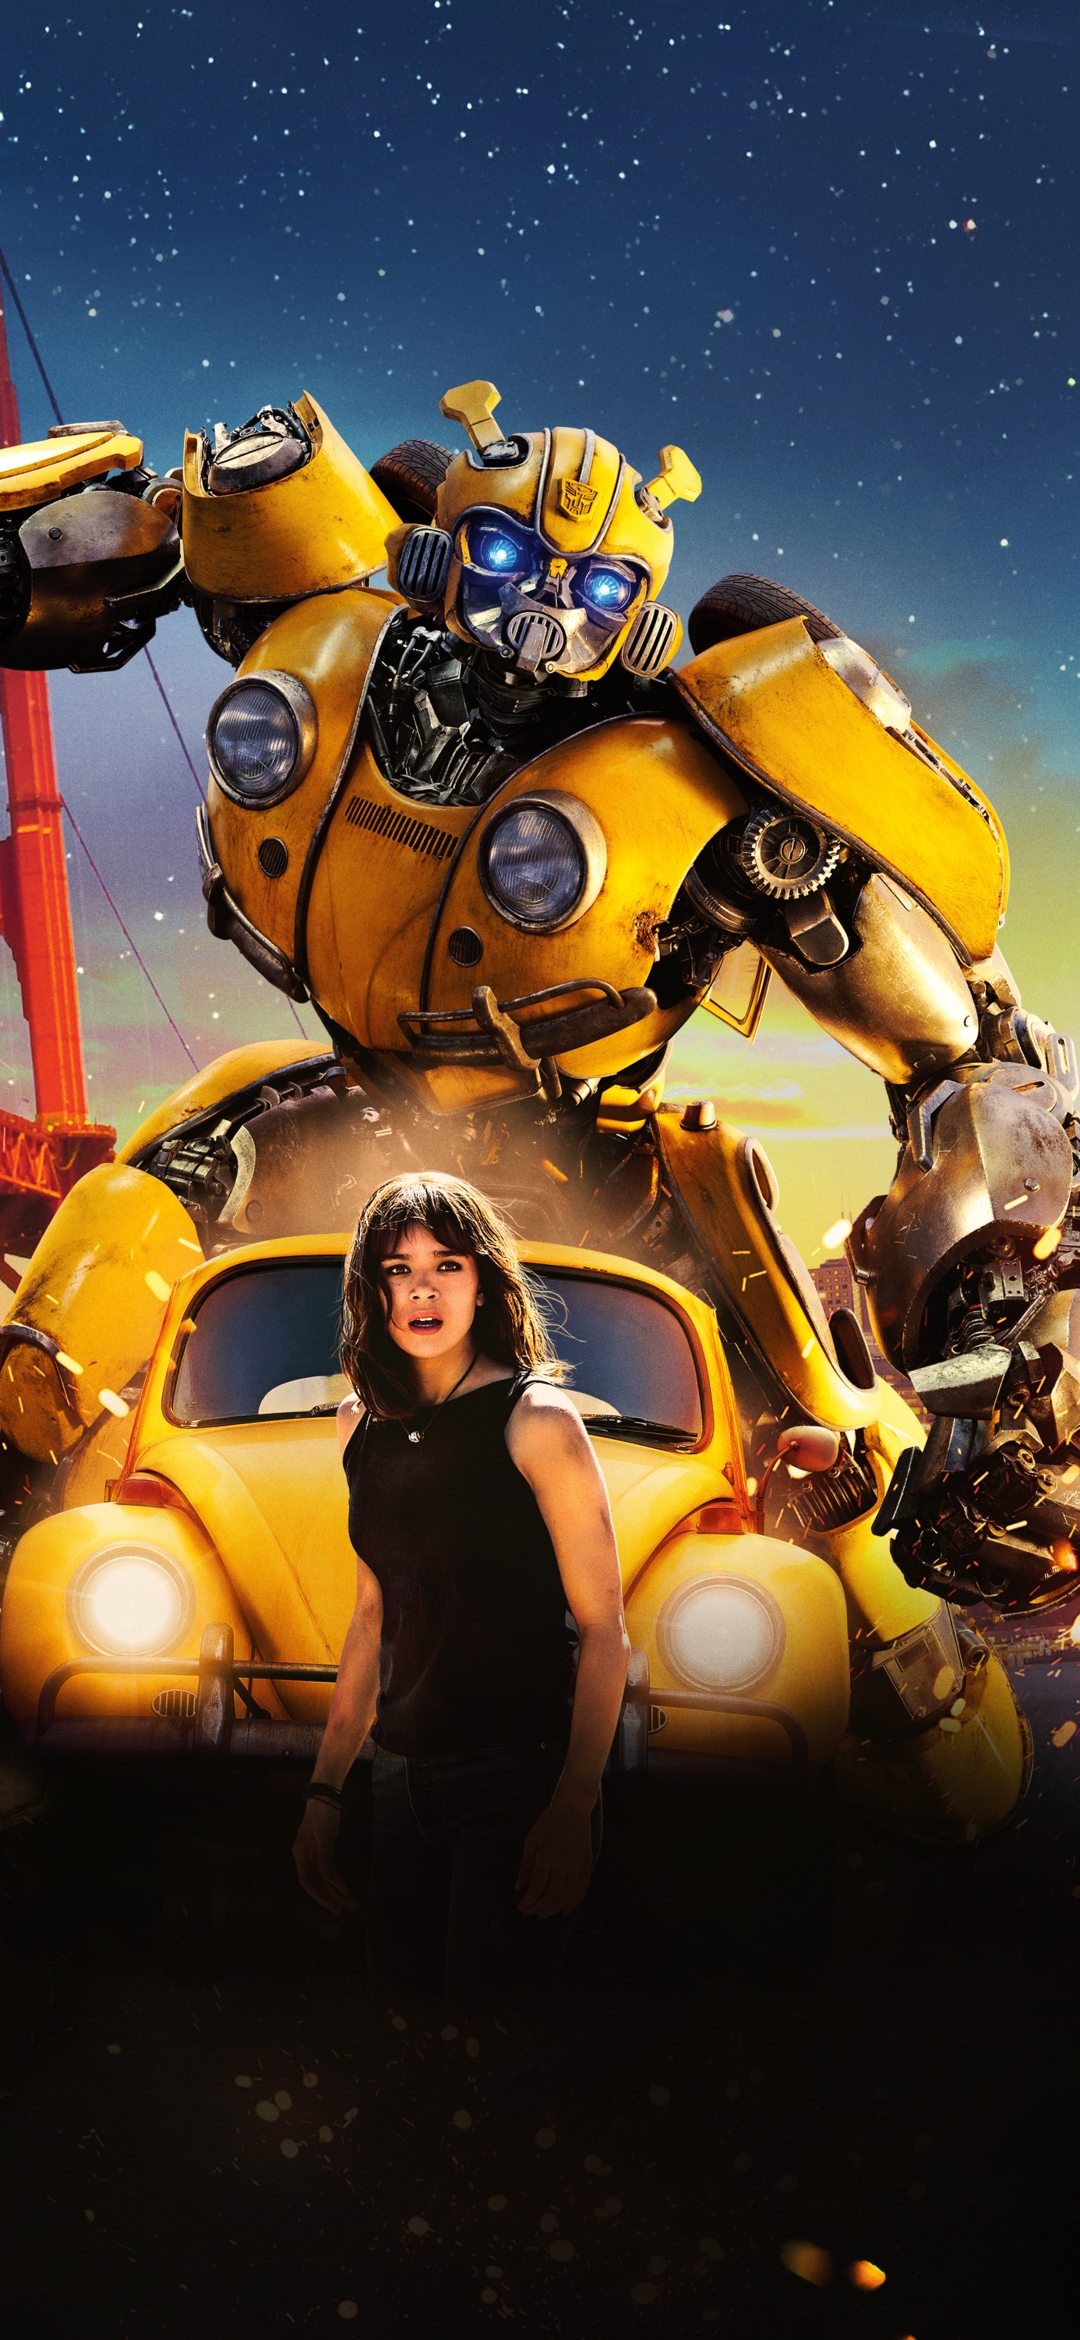 Descarga gratuita de fondo de pantalla para móvil de Películas, Hailee Steinfeld, Abejorro (Transformers), Bumblebee.